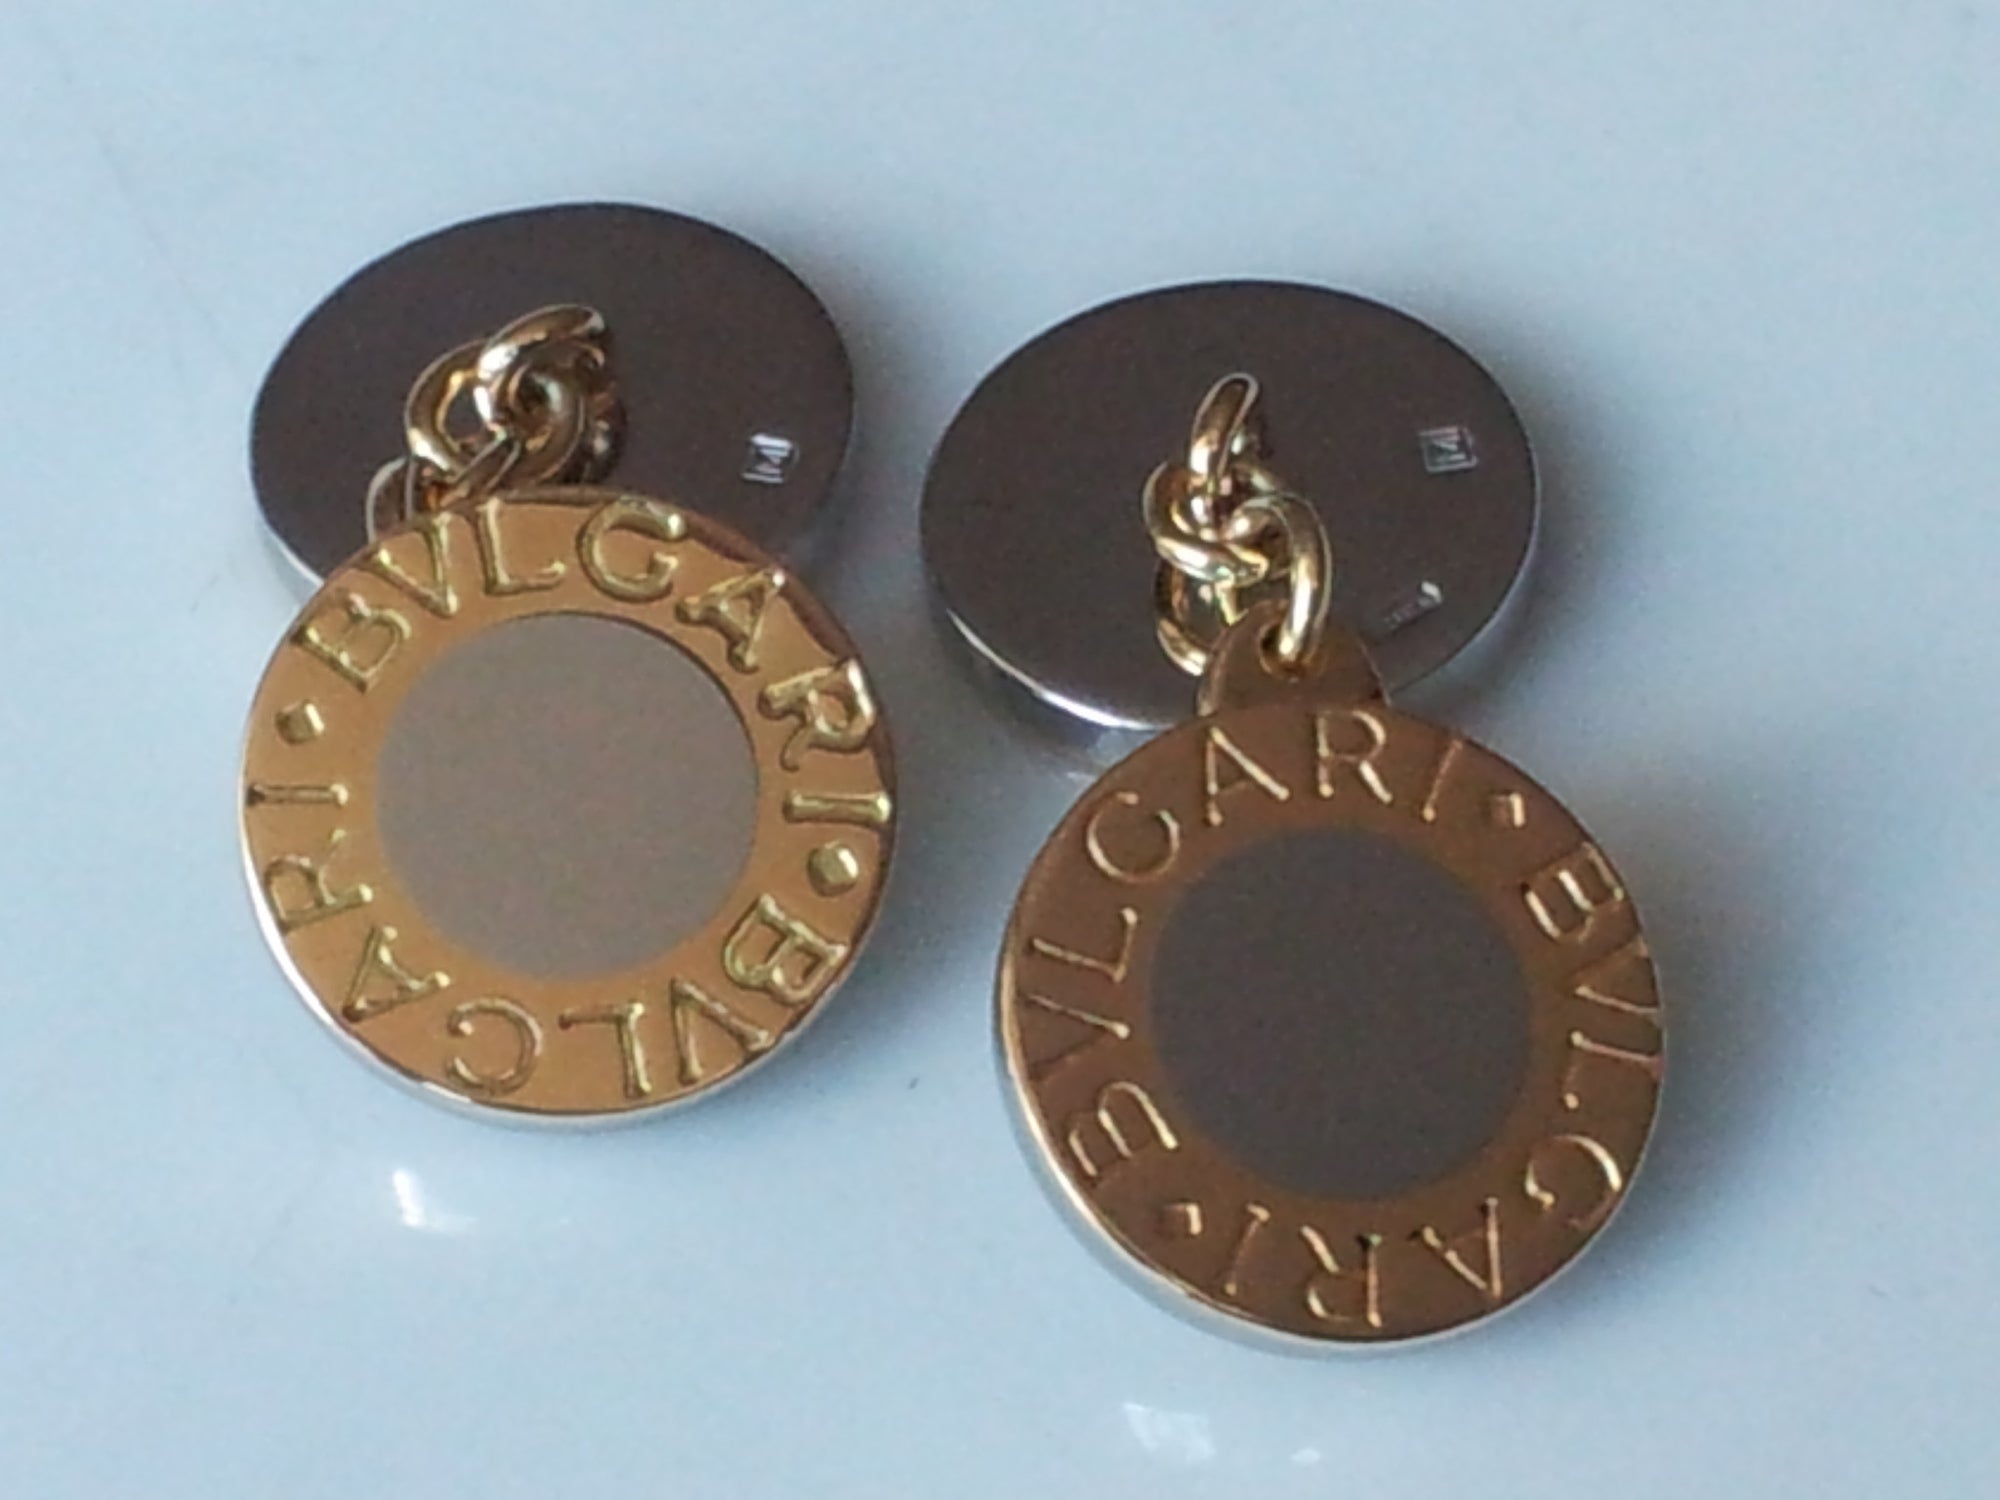 Bulgari Bvlgari 18K Gold/Stainless Steel Bi Colour Cufflinks Mint Condition